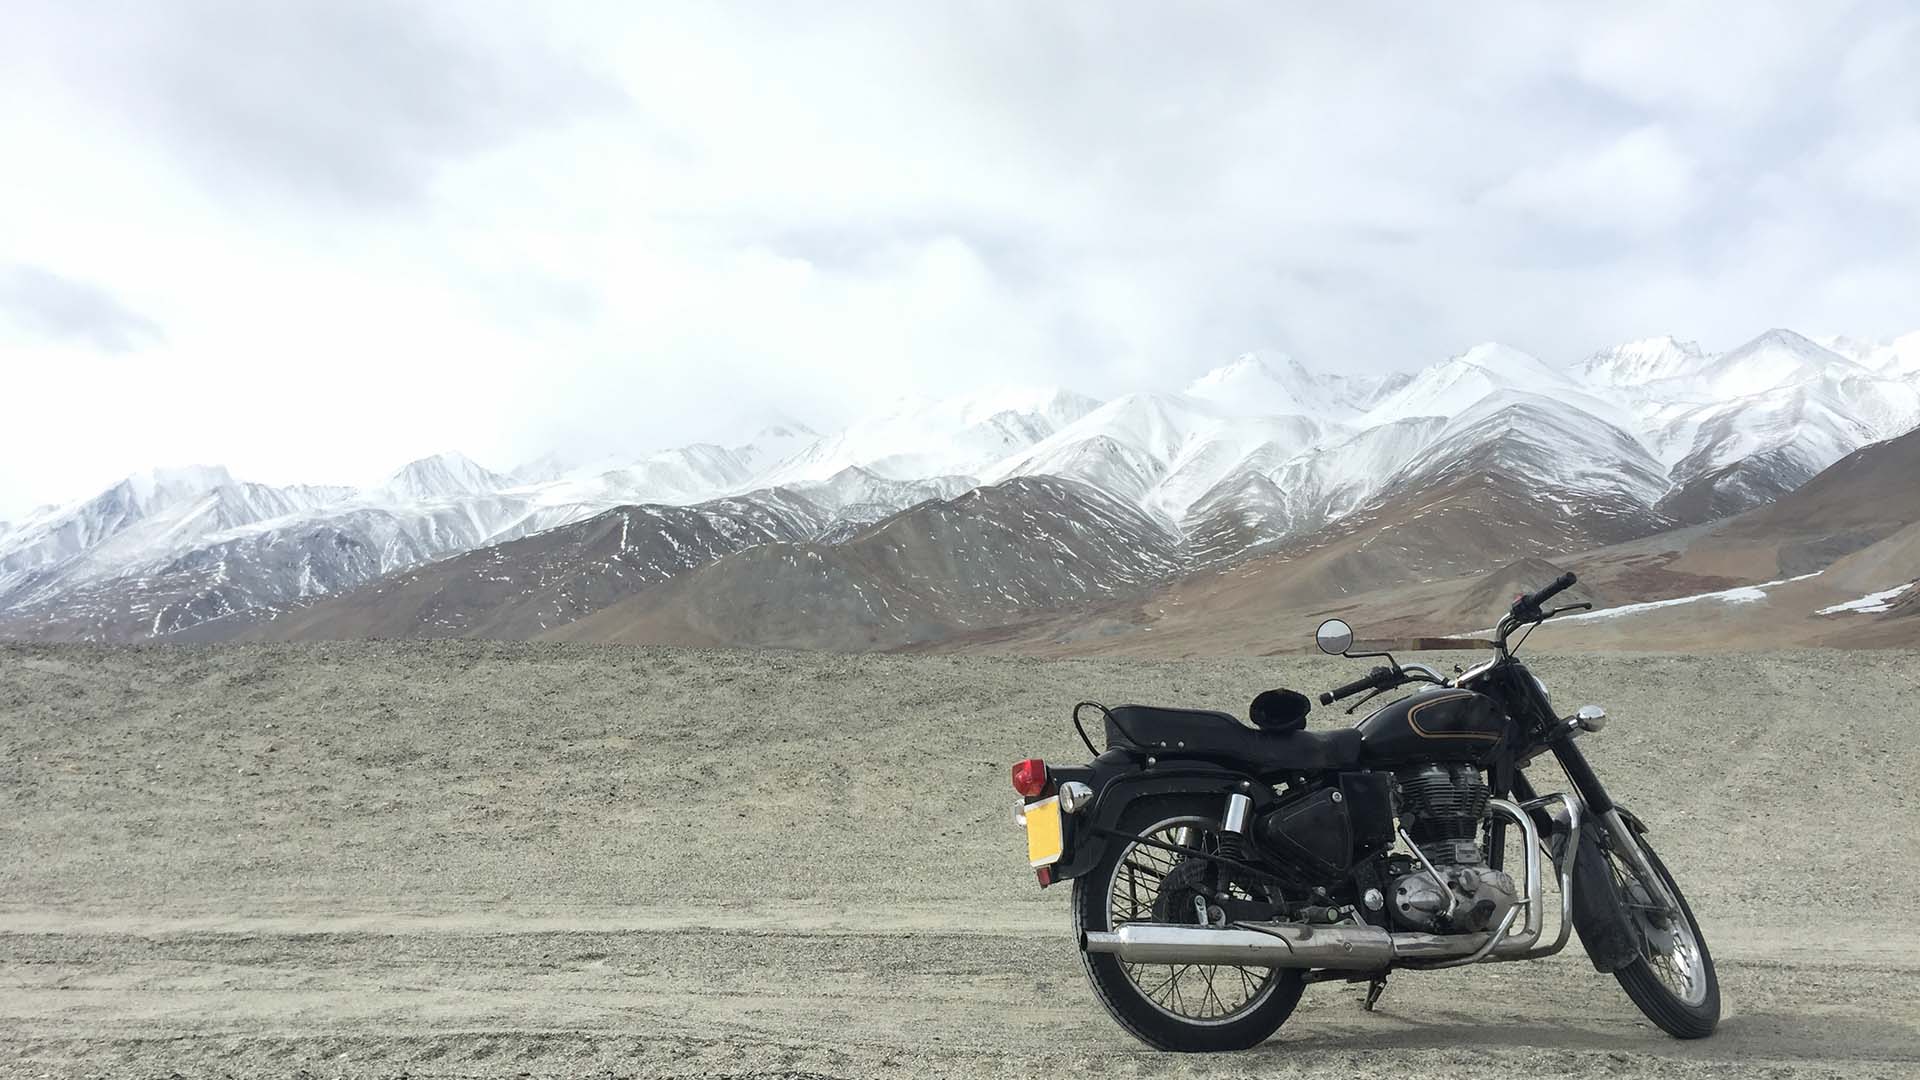 Mountain Biking in Ladakh